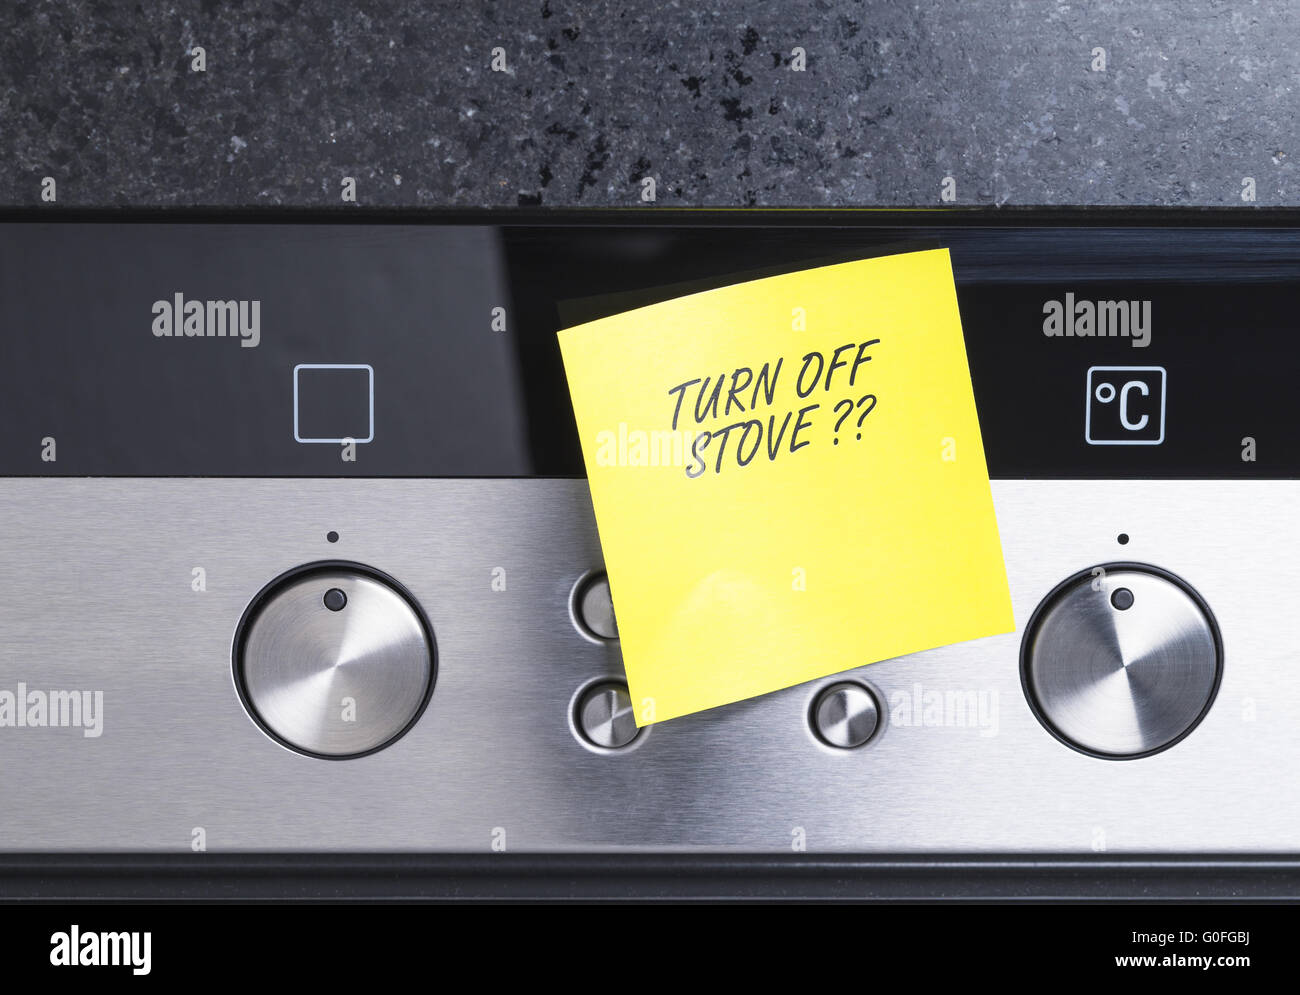 Turn off stove Stock Photo